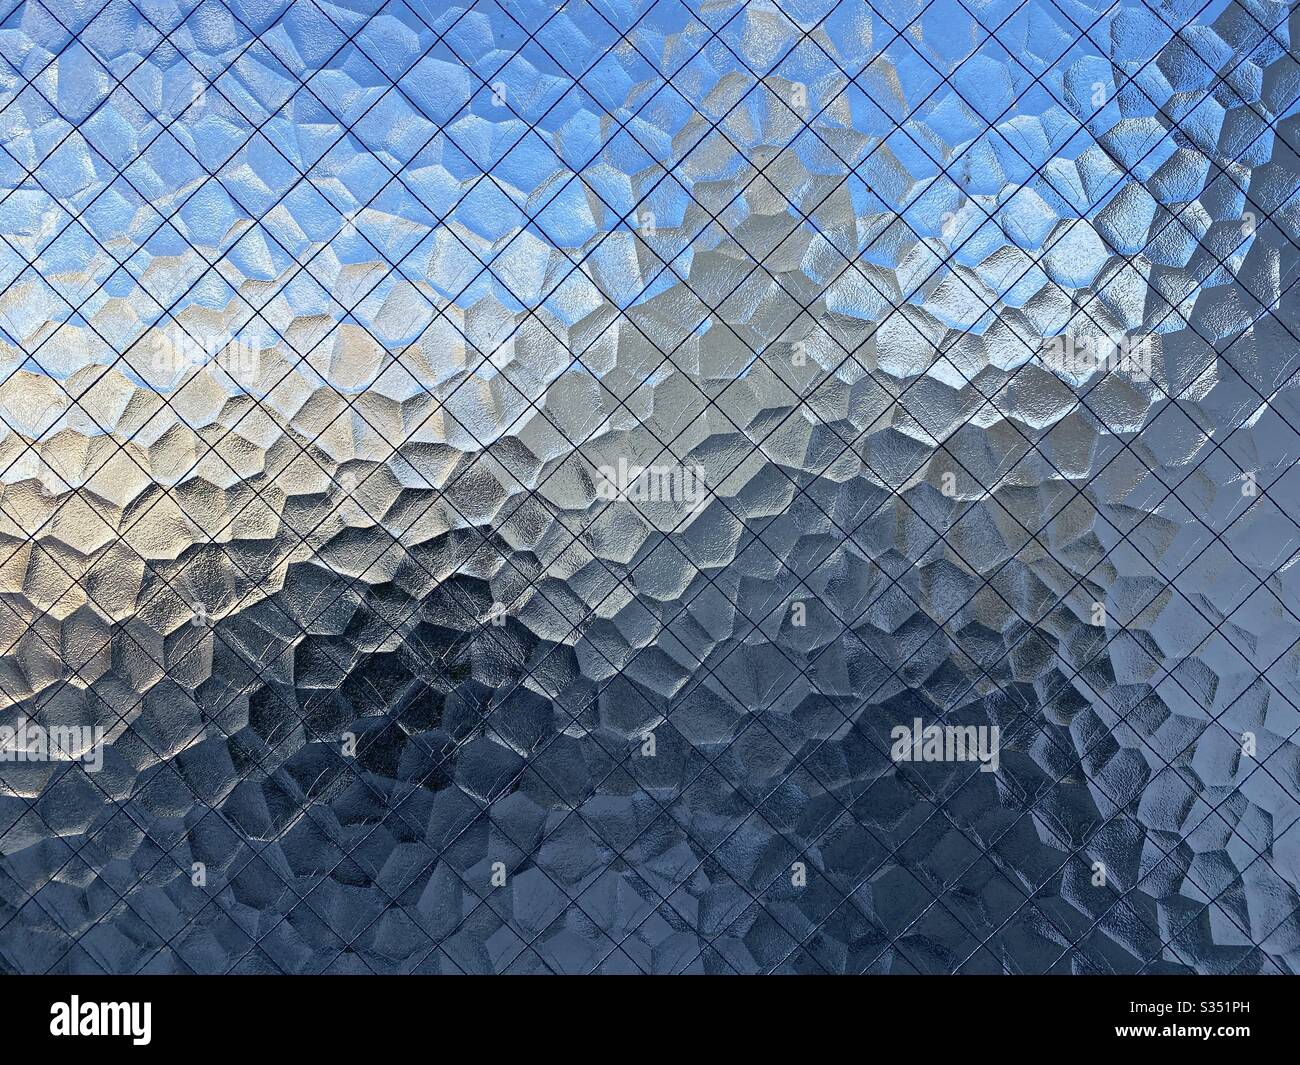 Malla de alambre de vidrio fotografías e imágenes de alta resolución - Alamy